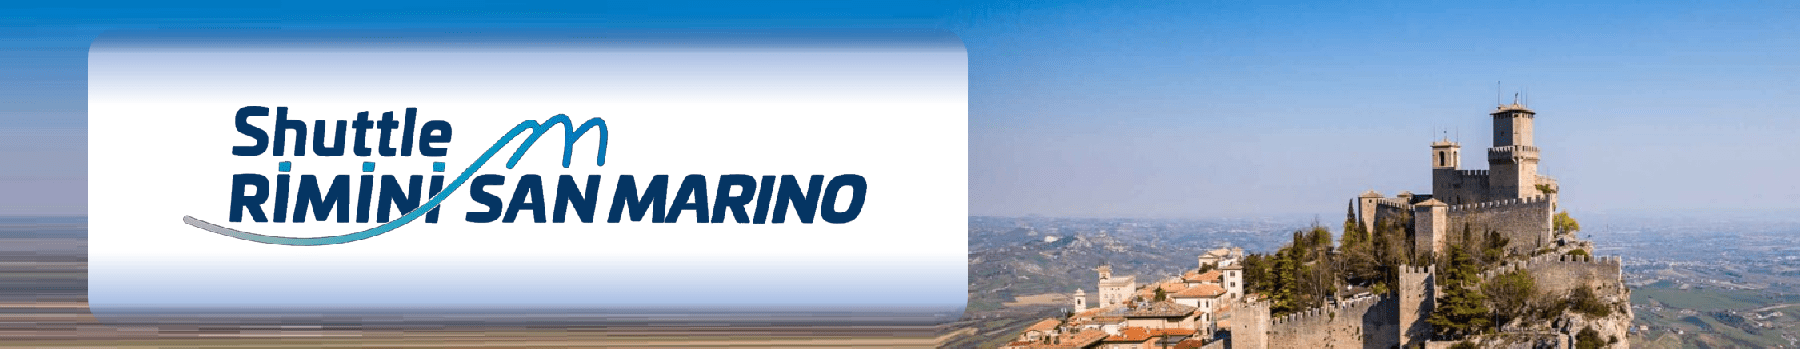 Conexión diaria entre Rimini y San Marino